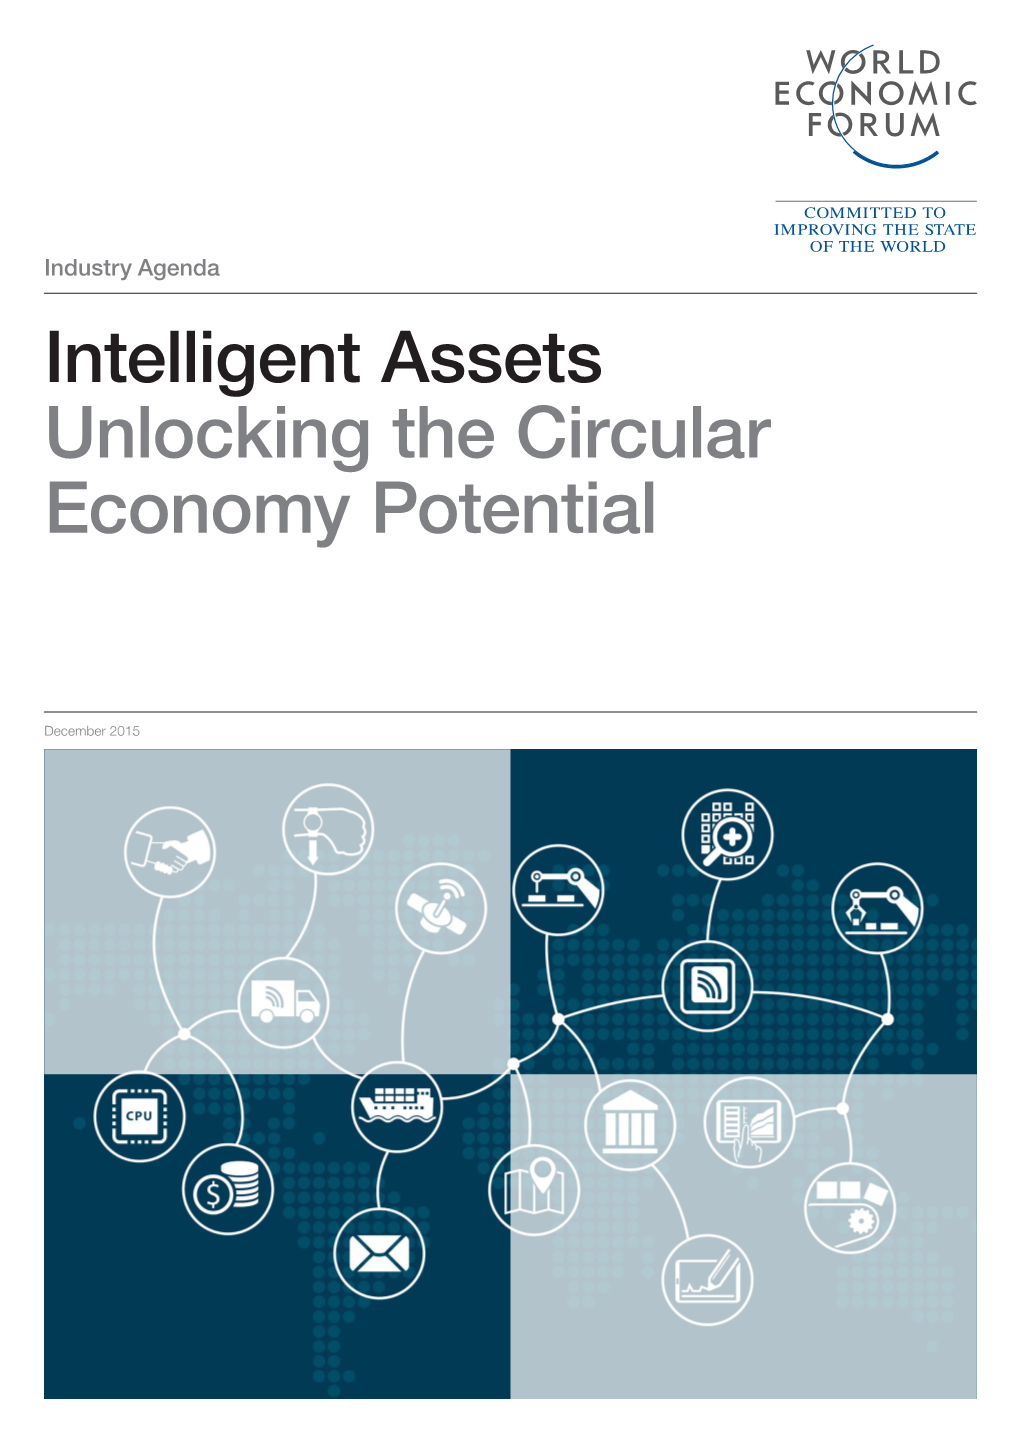 Intelligent Assets Unlocking the Circular Economy Potential